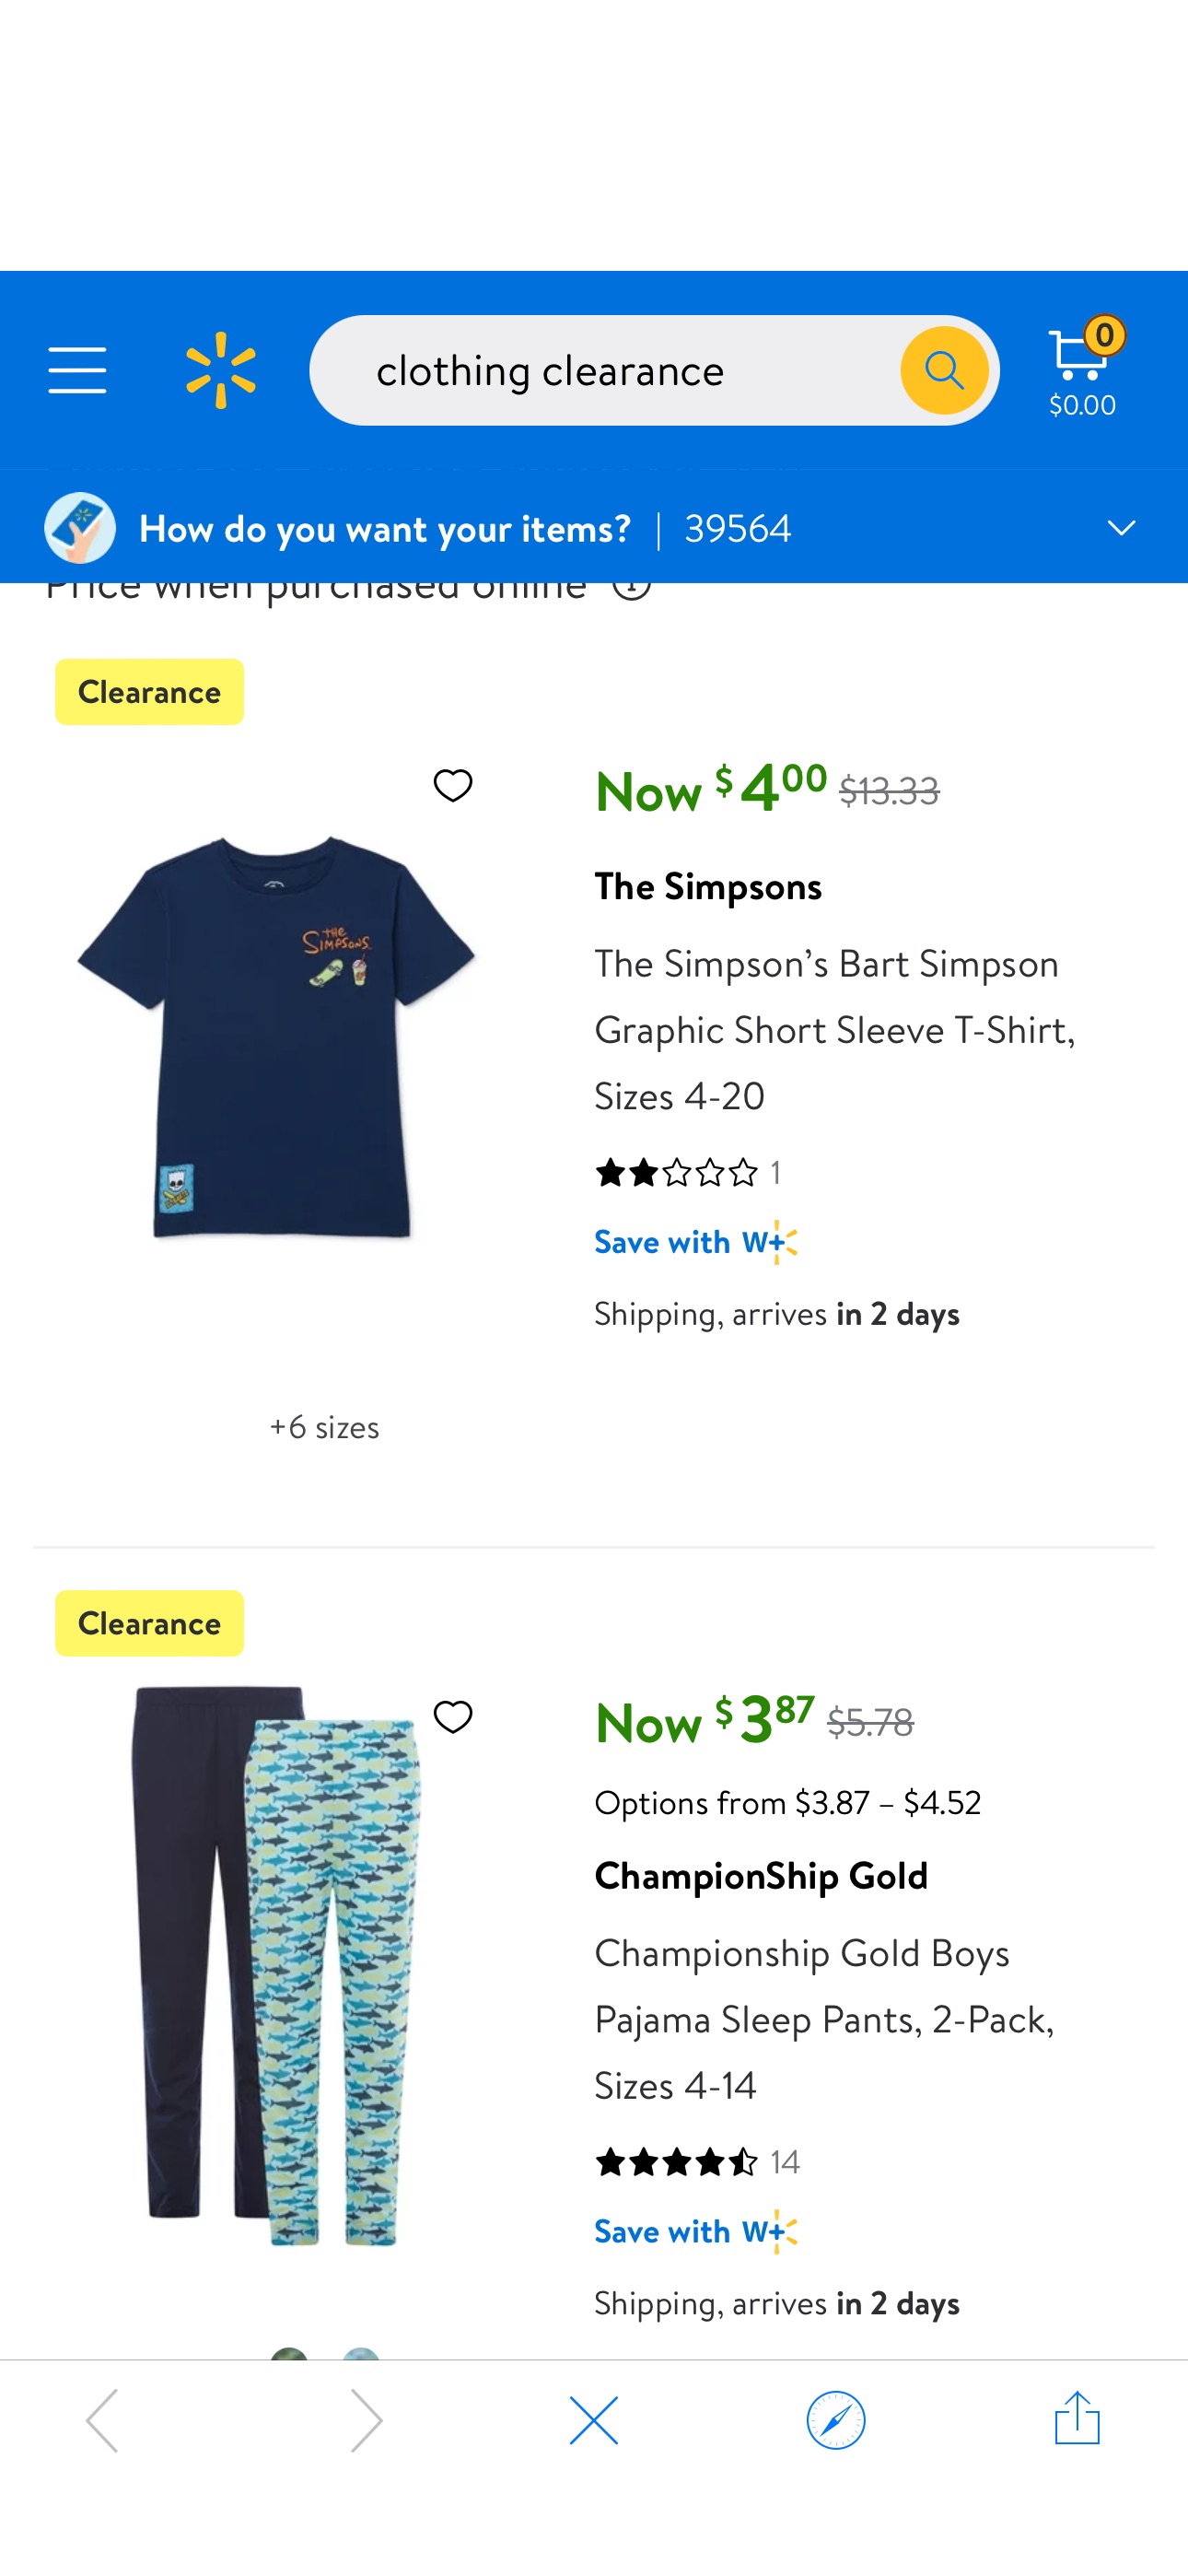 clothing clearance - Walmart.com